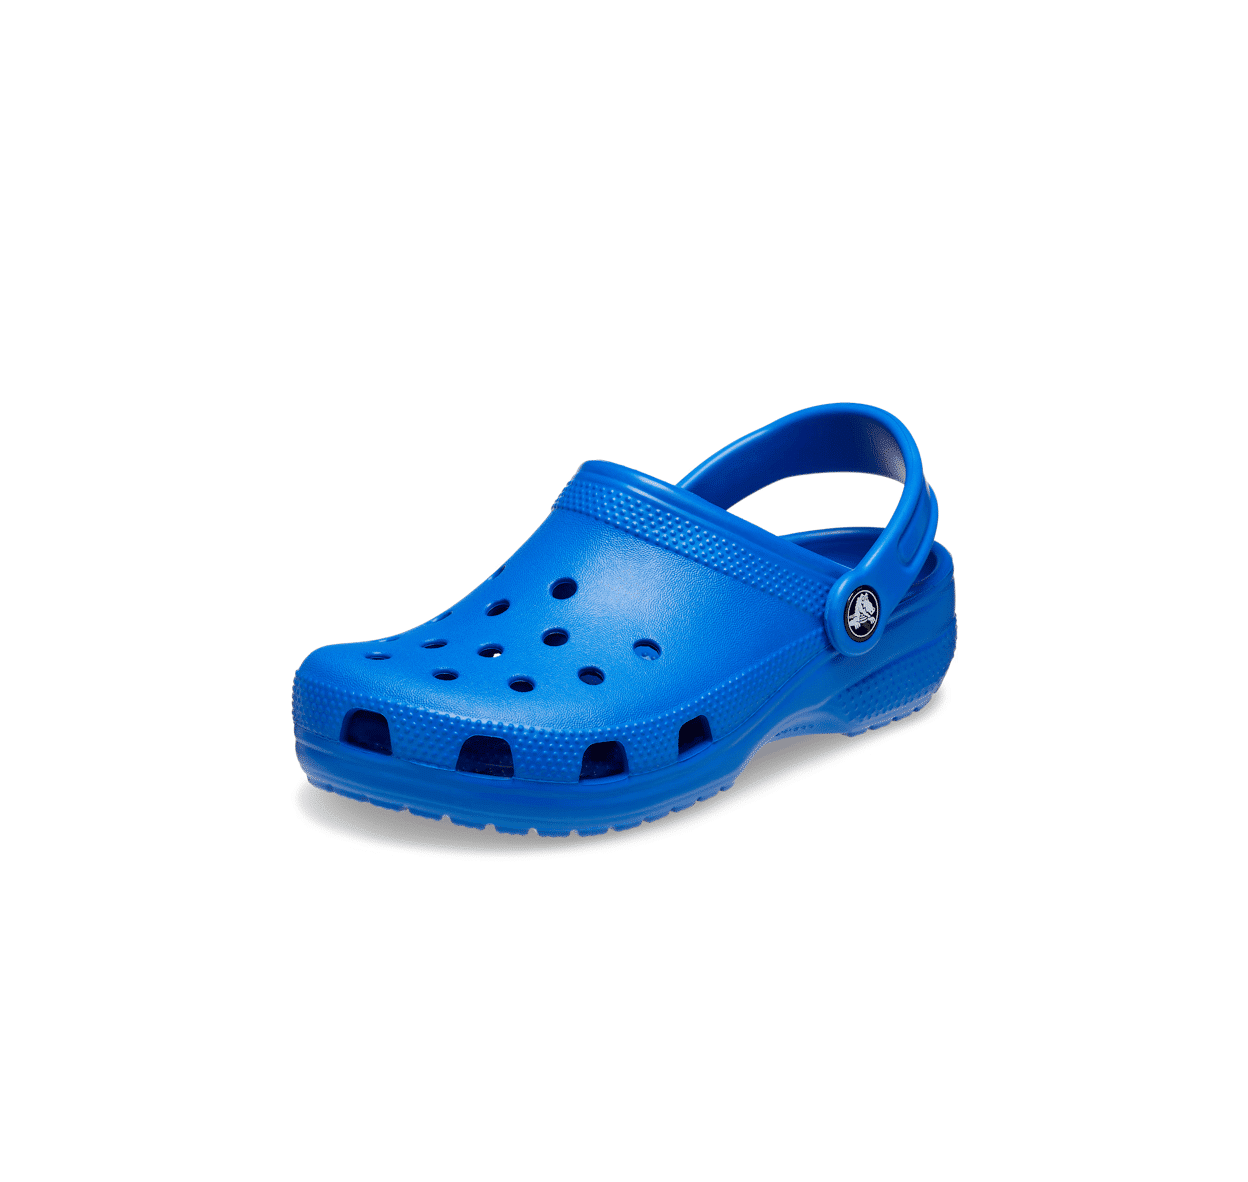 Crocs Sandal i til